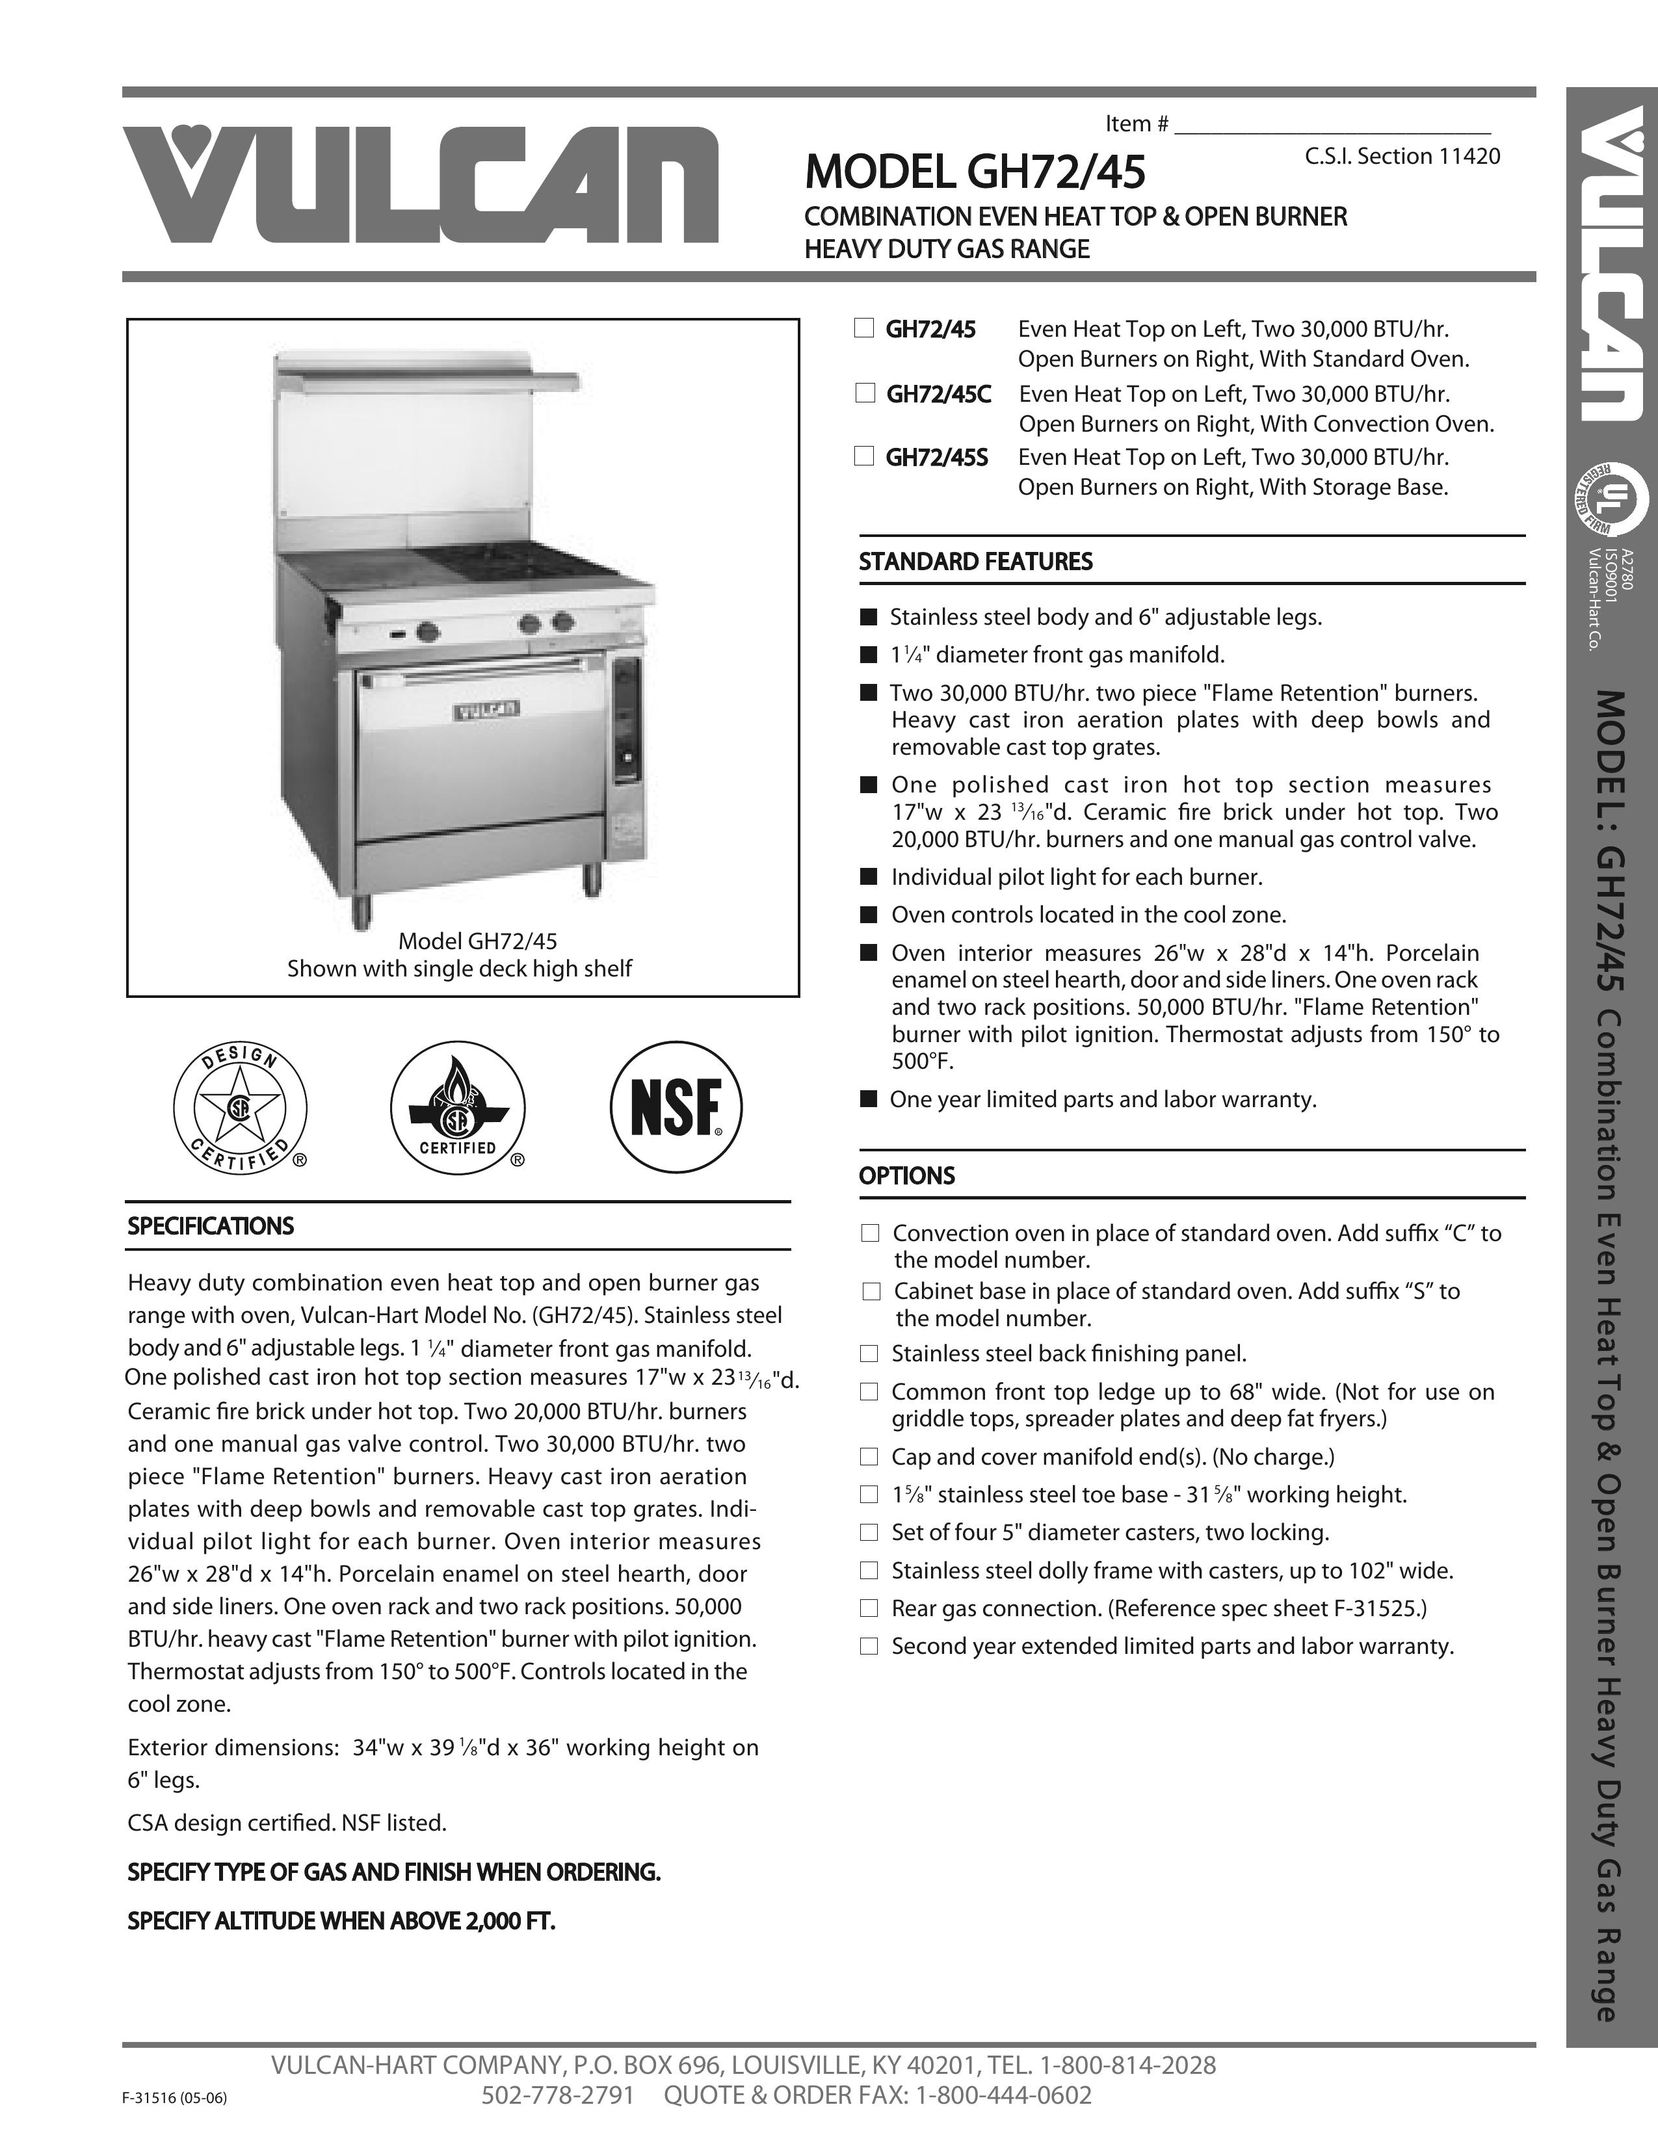 Vulcan-Hart GH72/45 Convection Oven User Manual